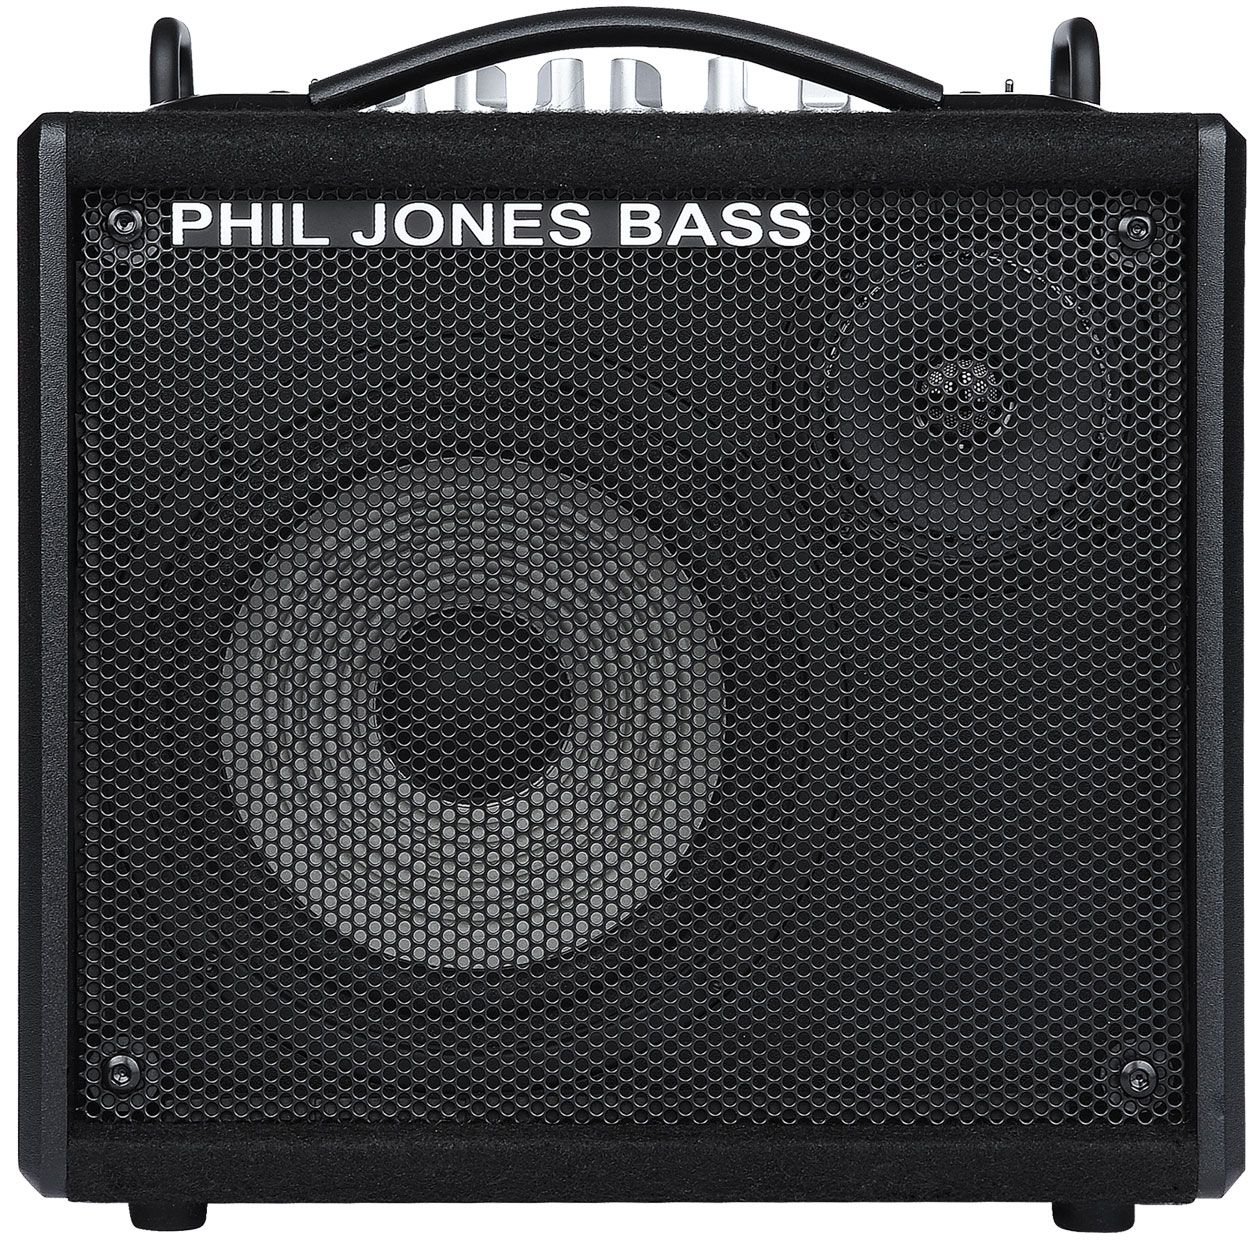 Quick Hit: Phil Jones Bass Micro 7 Review